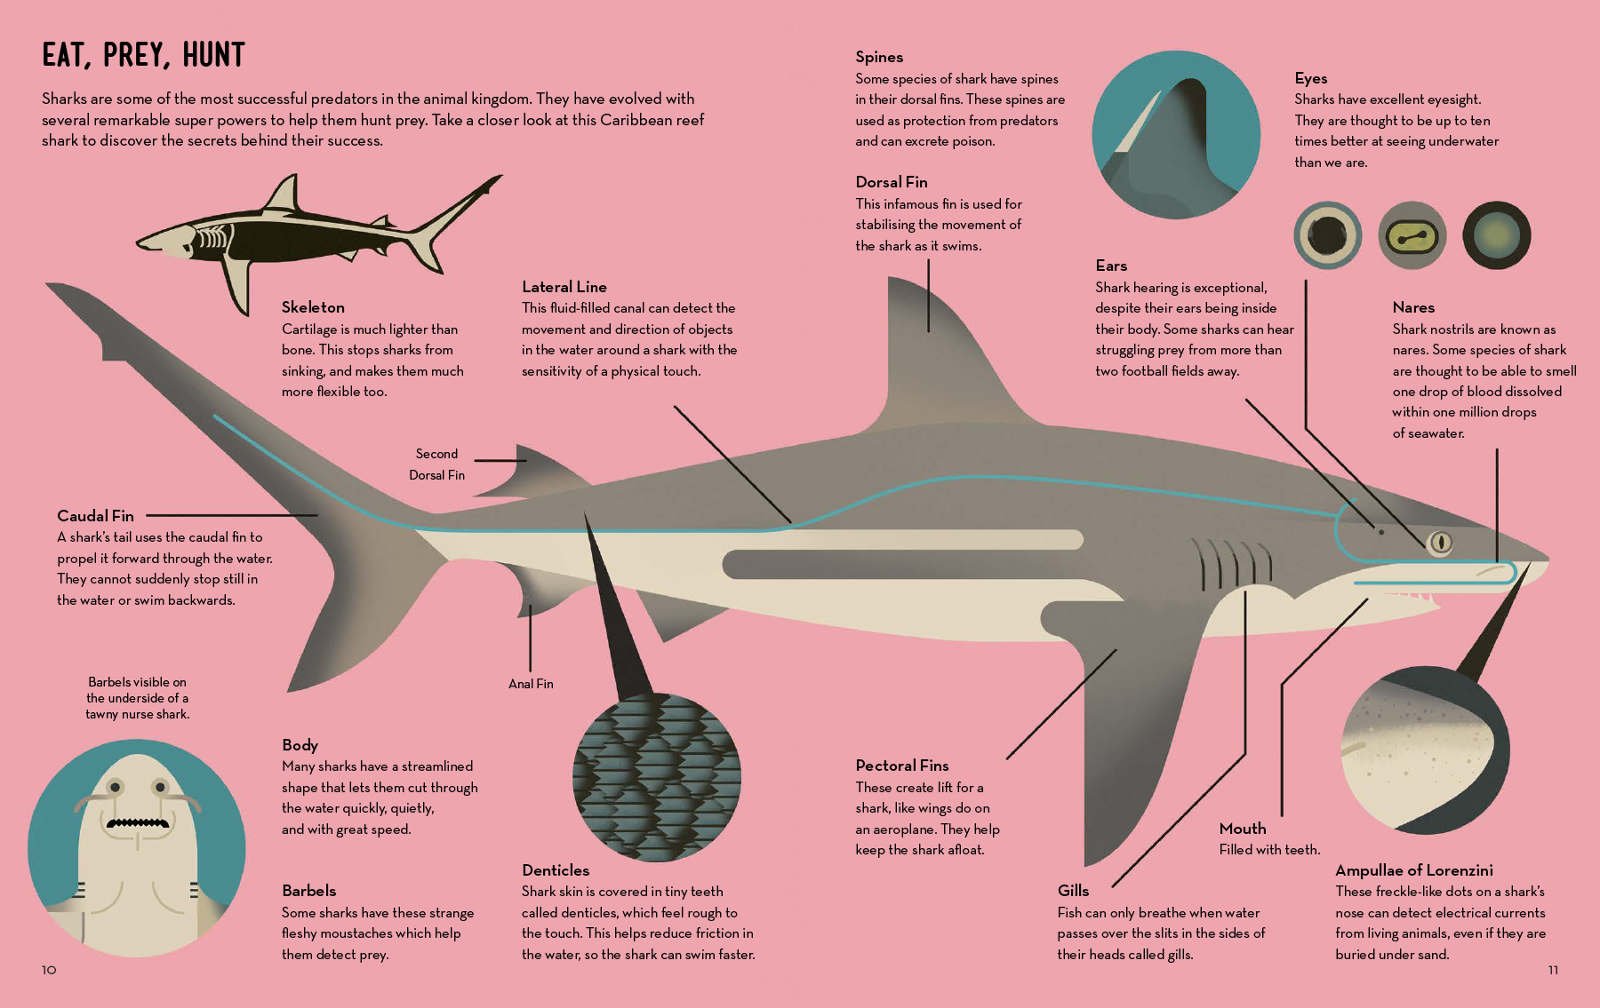 6-Smart-About-Sharks-Owen-Davey-Science-Biology_1600_c.jpg